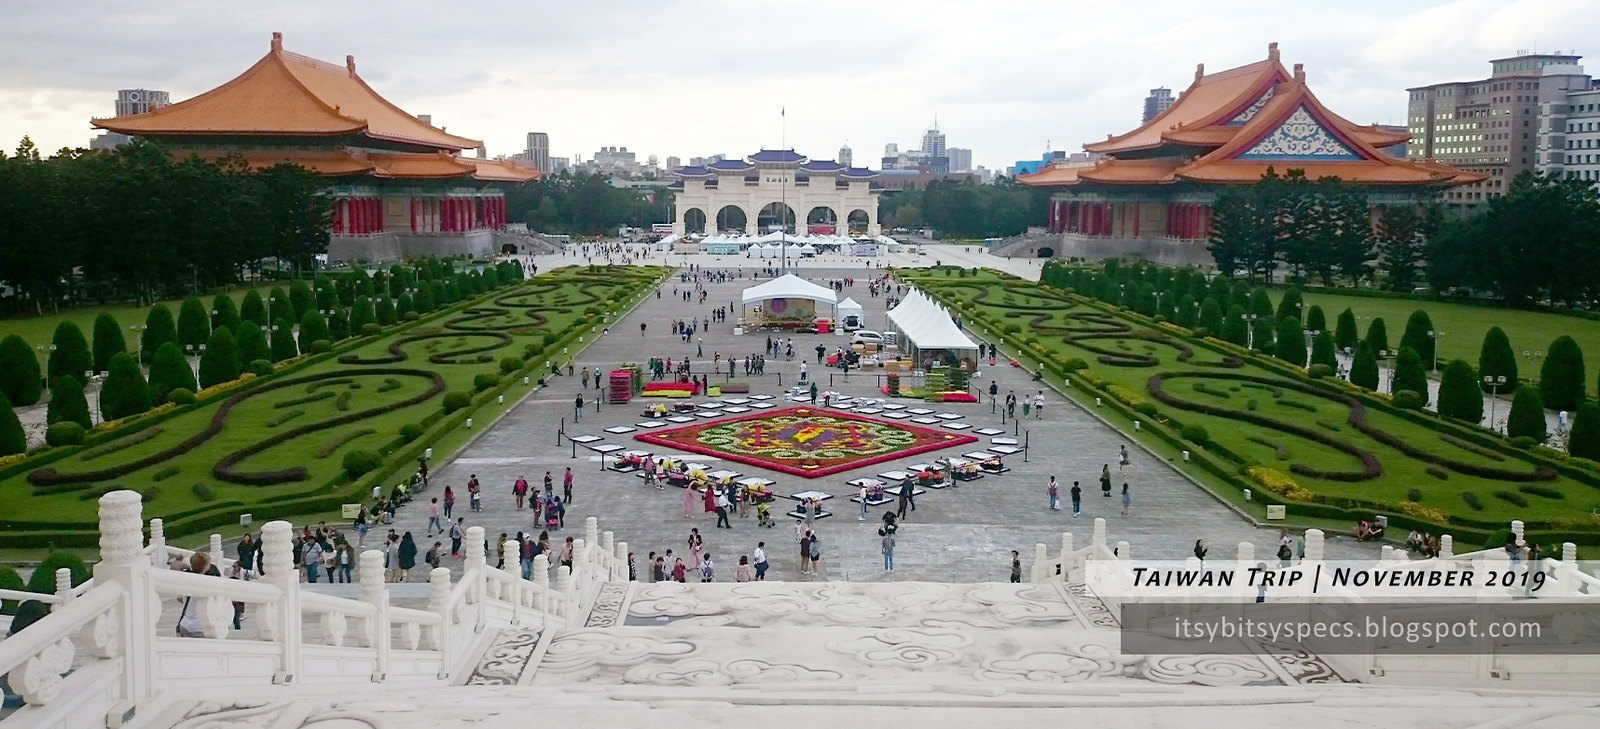 Taiwan Trip 2019 | Chiang Kai-shek Memorial Hall